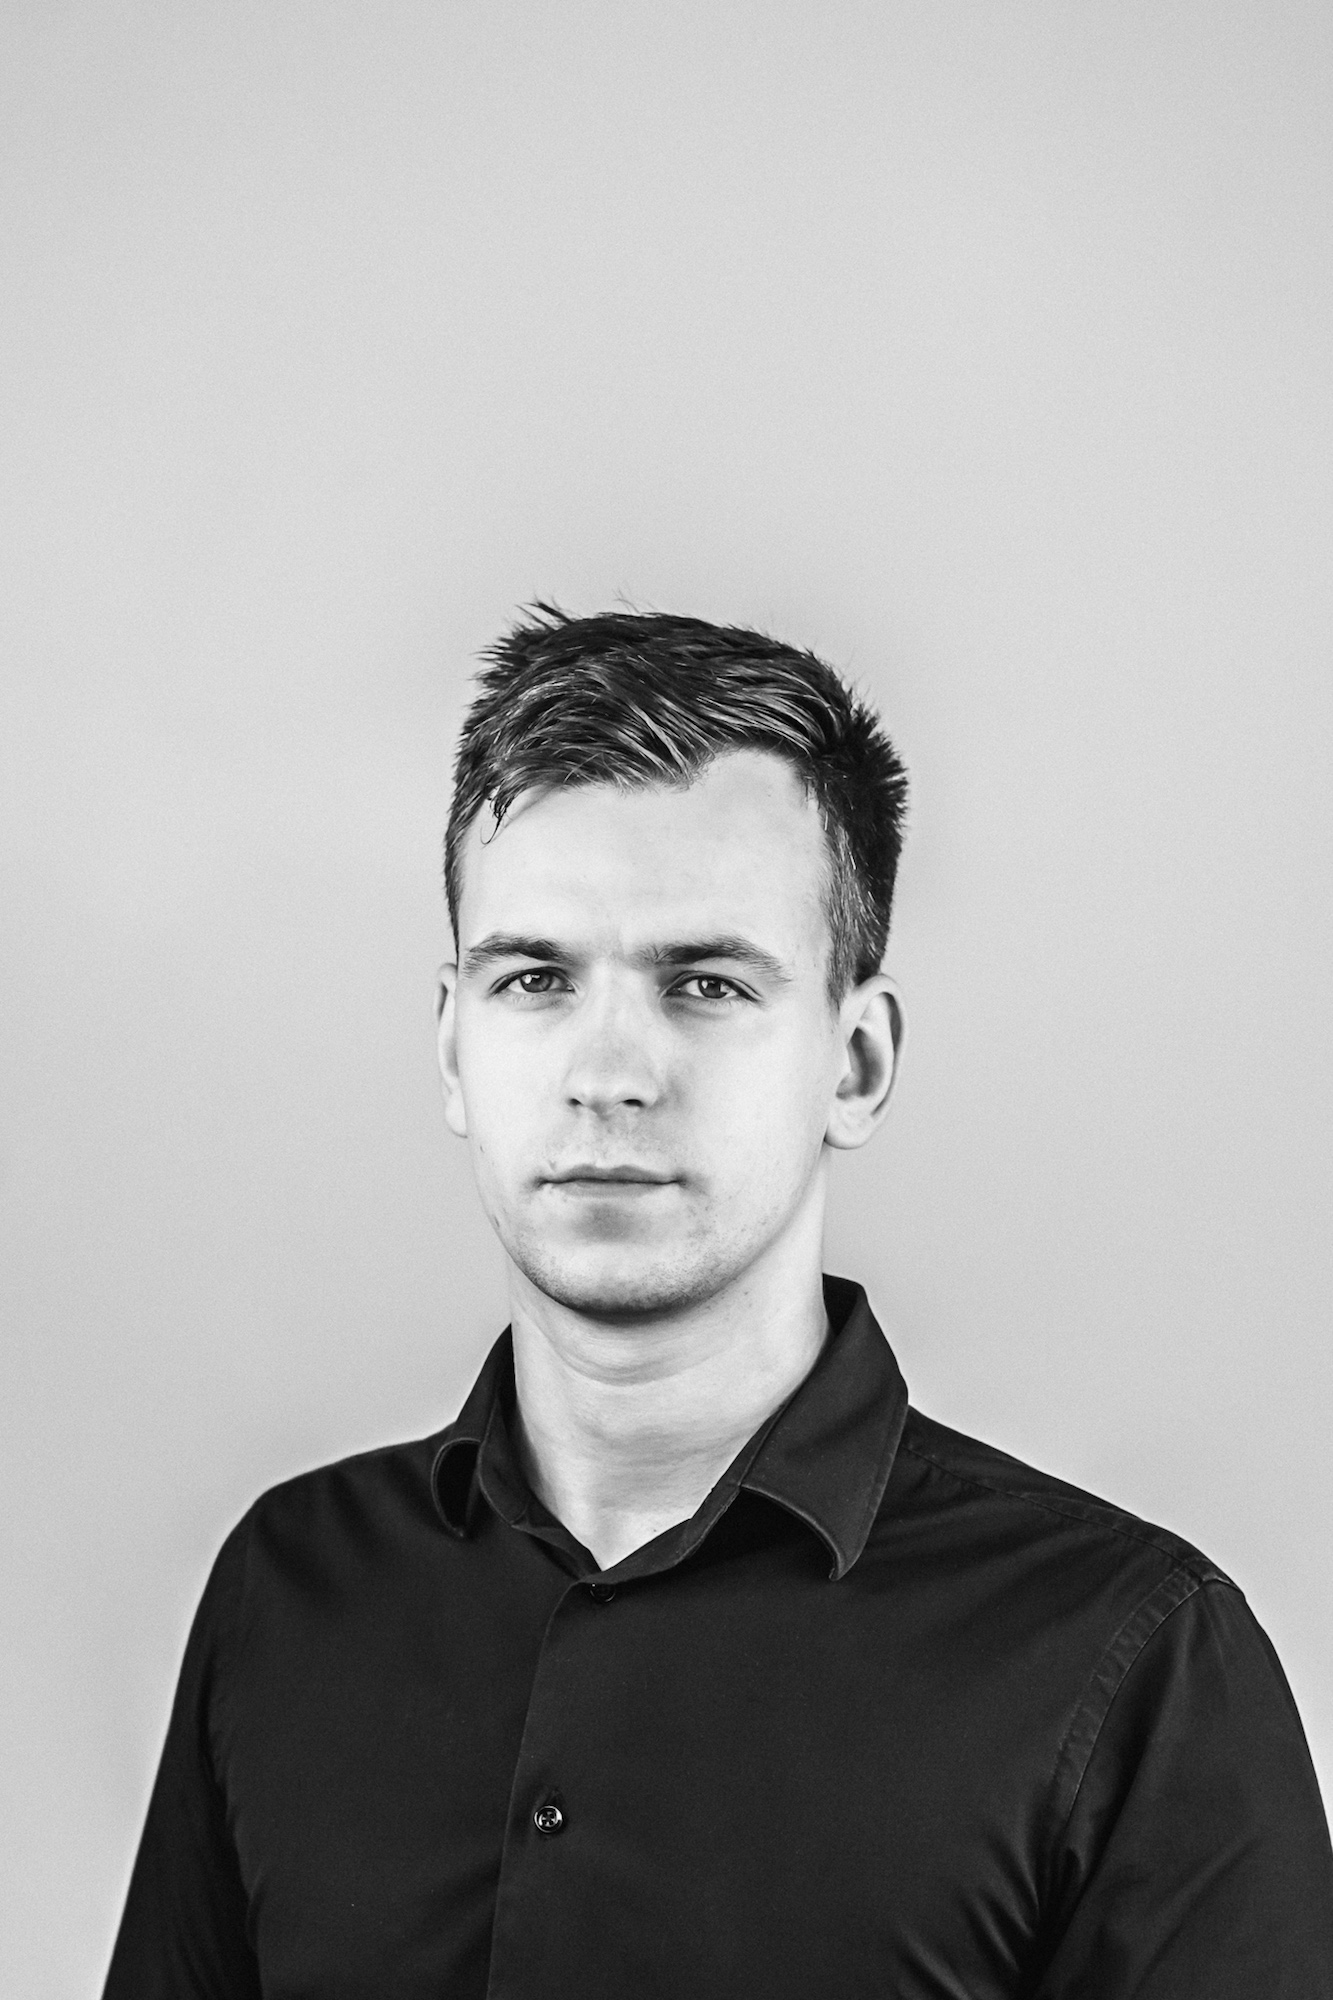 Kristians Vebers Profile Picture.jpg